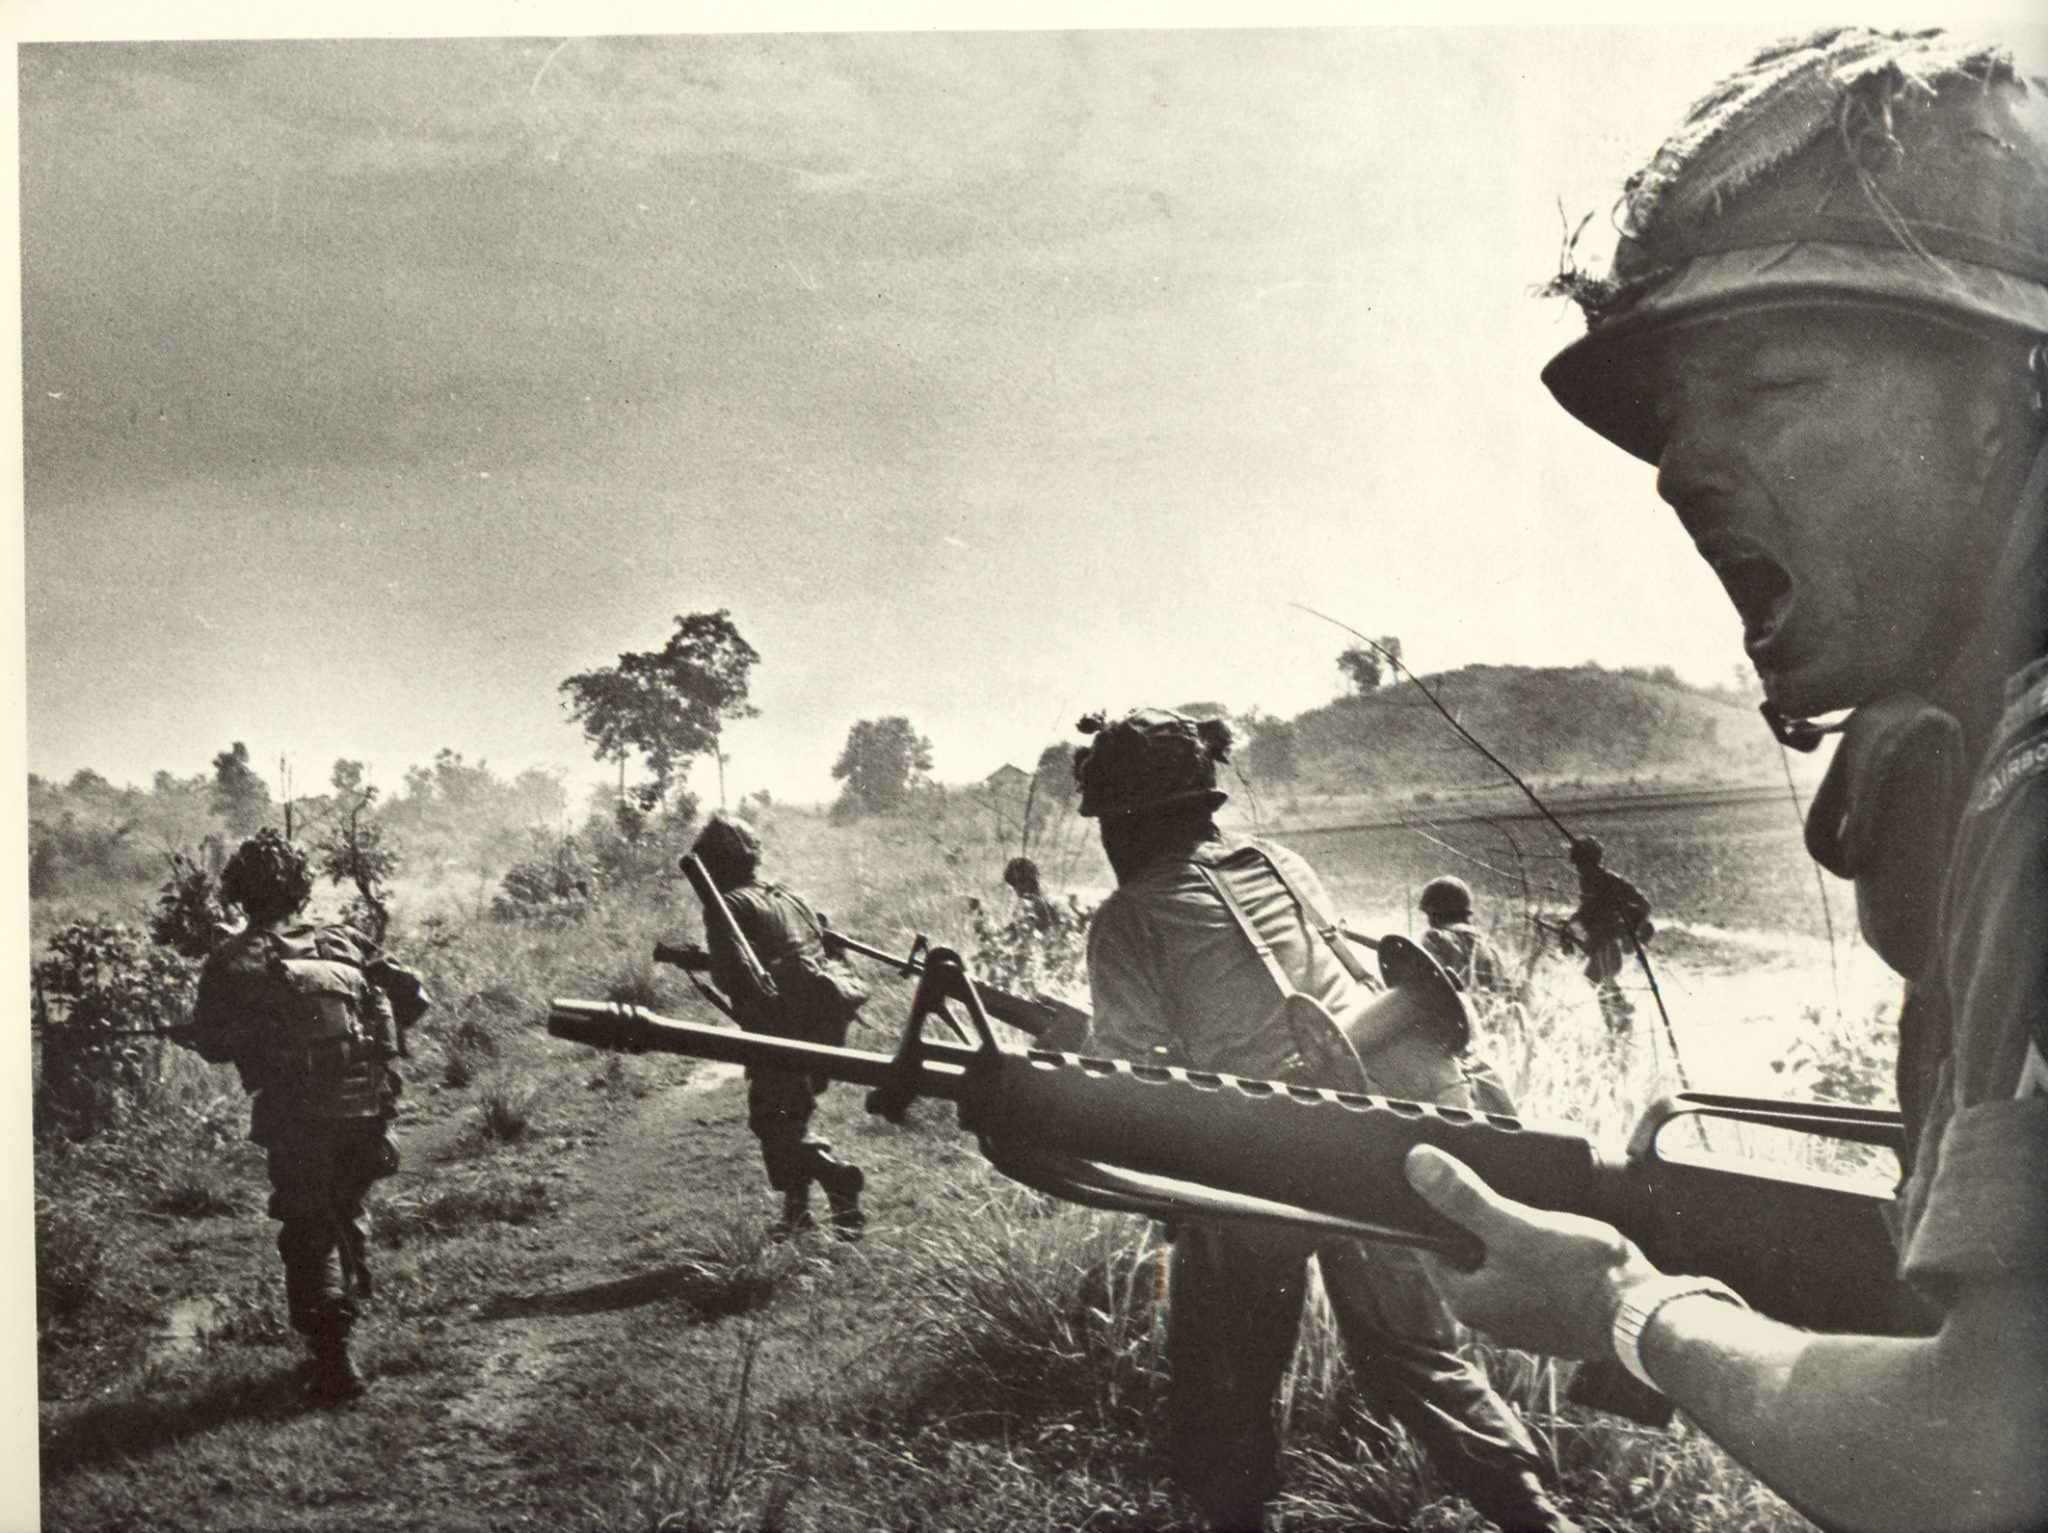 173rd airborne, Vietnam_soldiers attacking_journal of wild culture.jpg